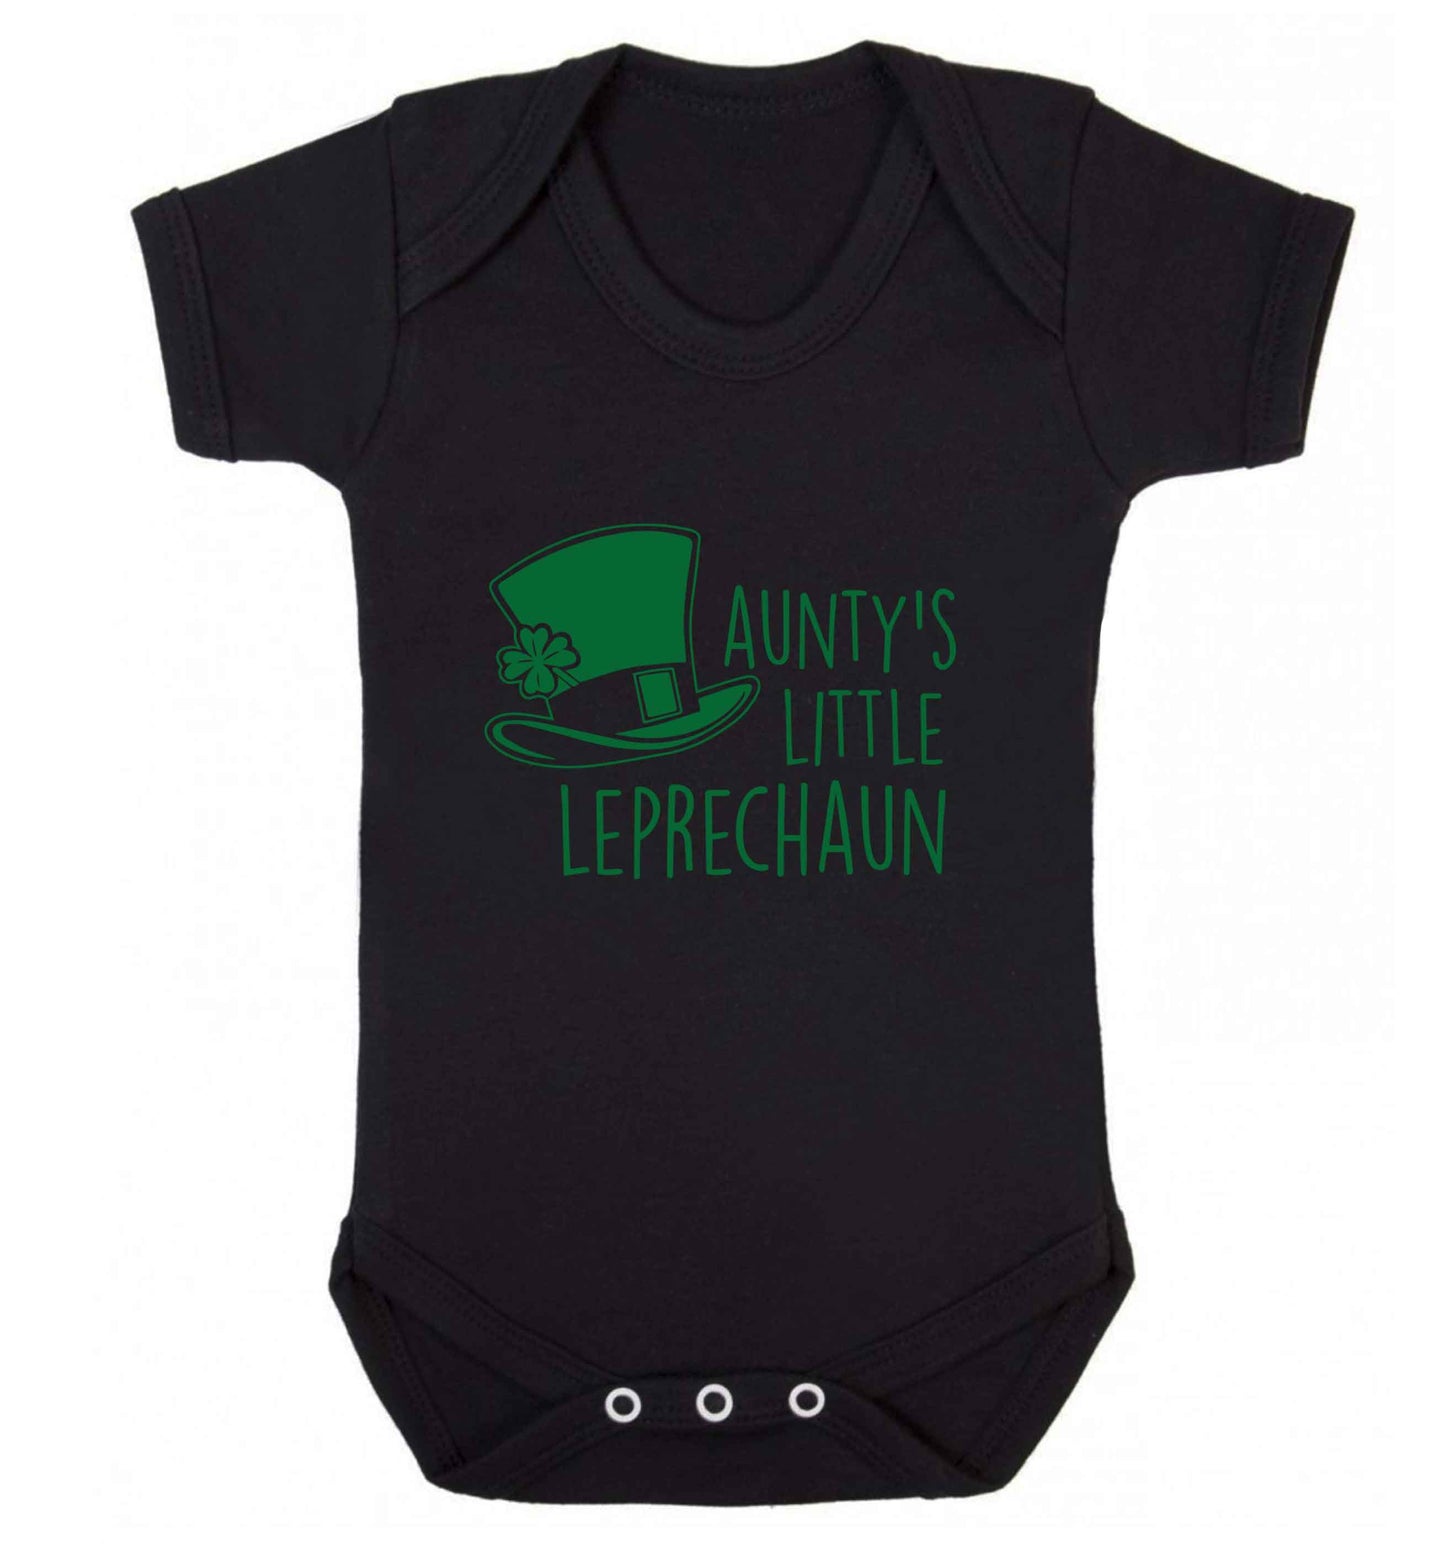 Aunty's little leprechaun baby vest black 18-24 months